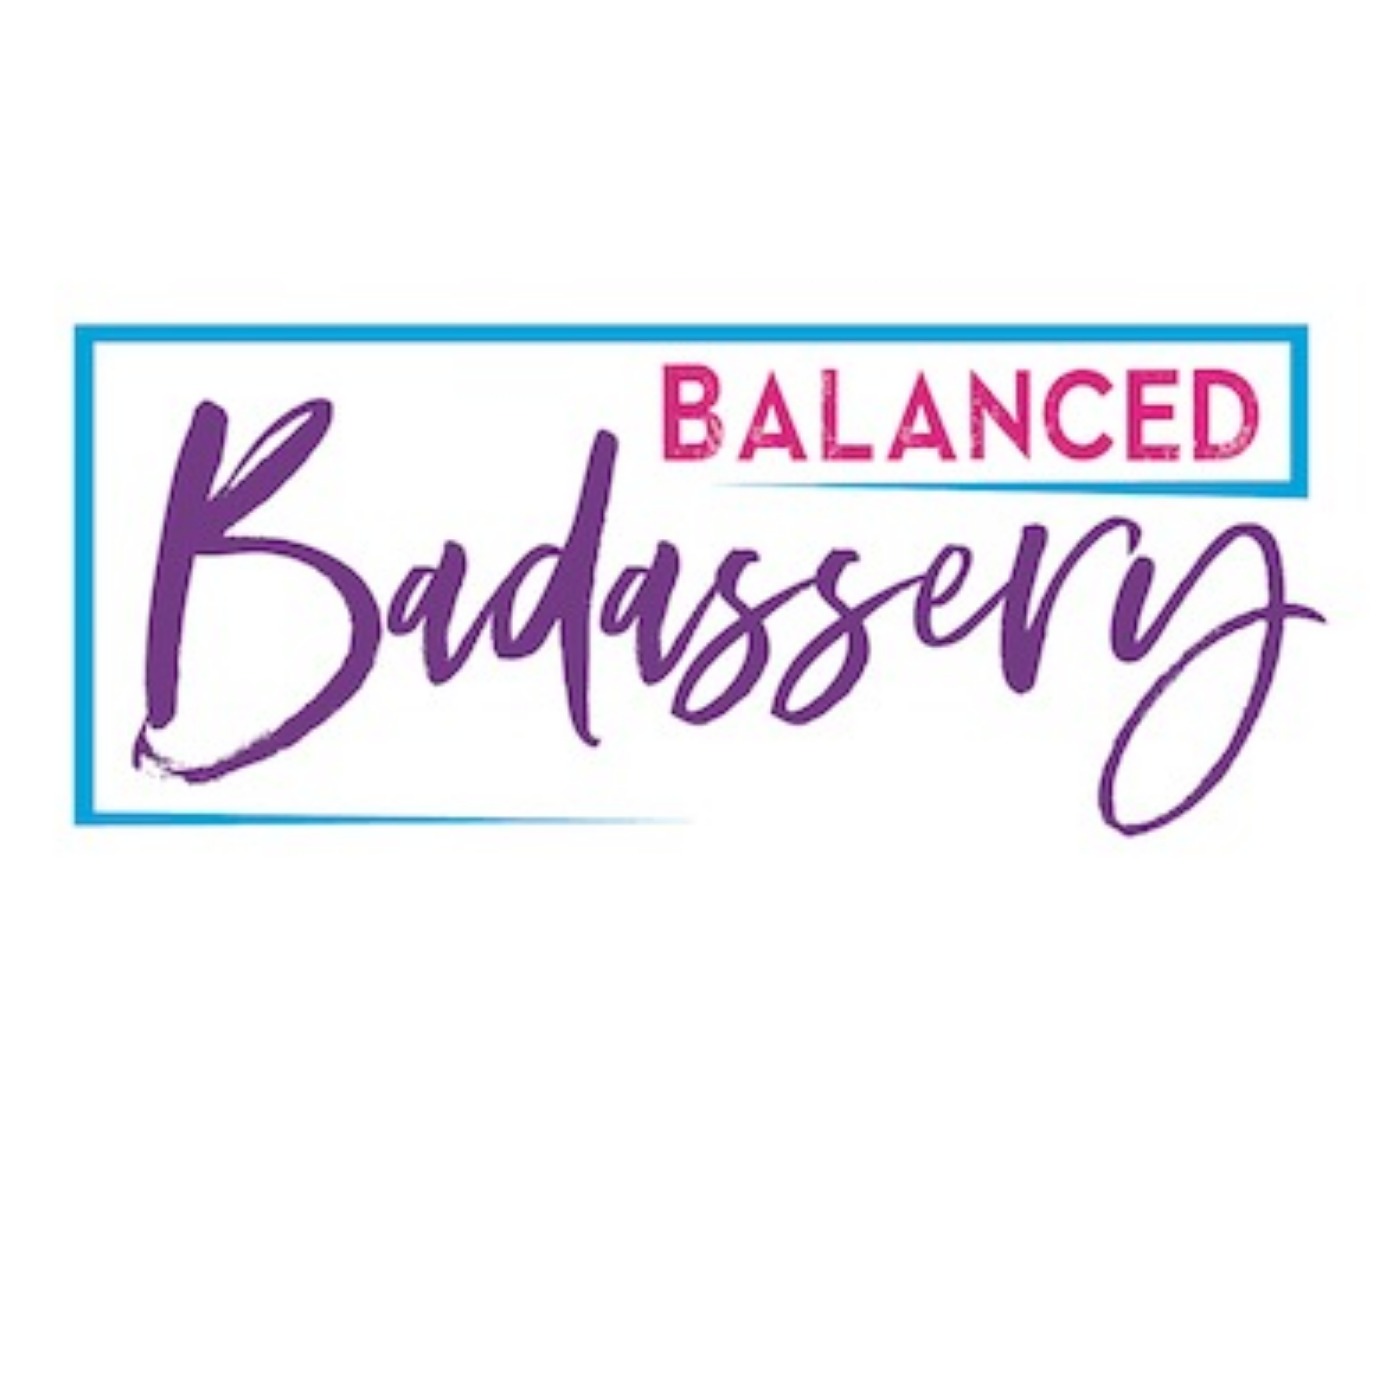 Balanced Badassery